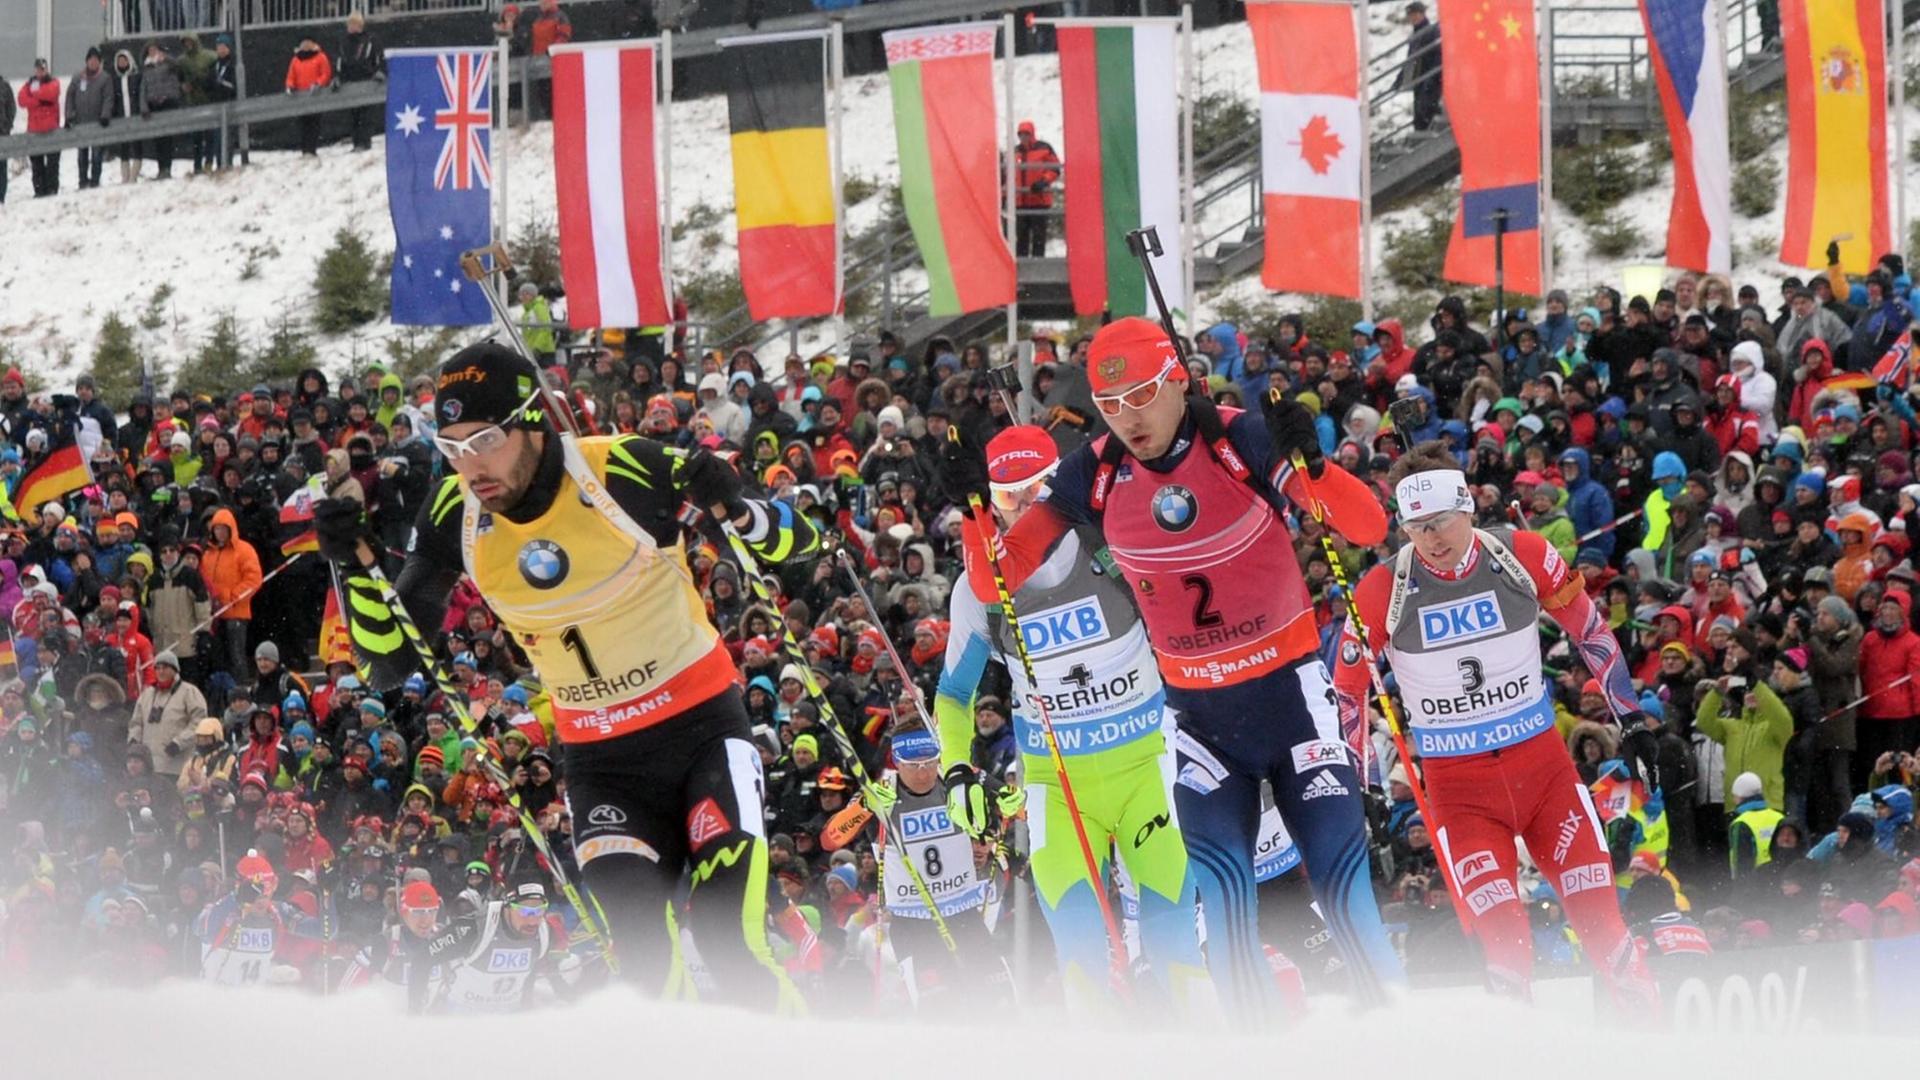 Biathlon Weltcup 15 km Massenstart Herren am 11.01.2015 in der DKB-Ski-Arena in Oberhof (Thüringen).